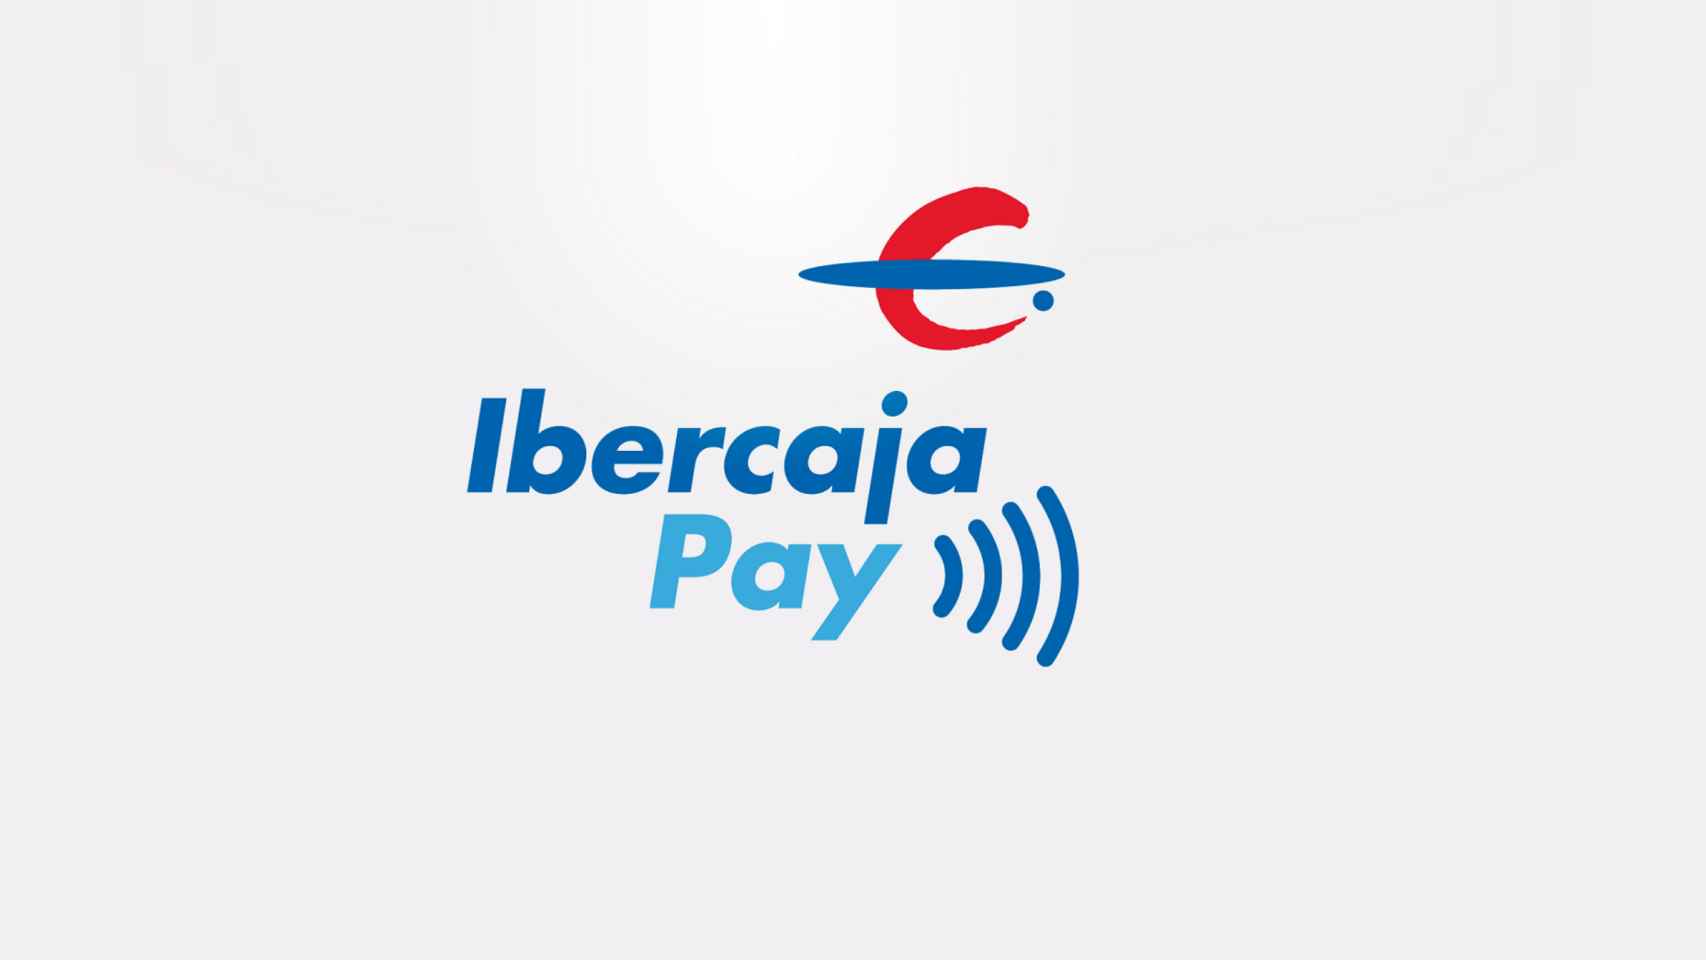 Pagar con el móvil con Ibercaja será posible en Ibercaja Pay